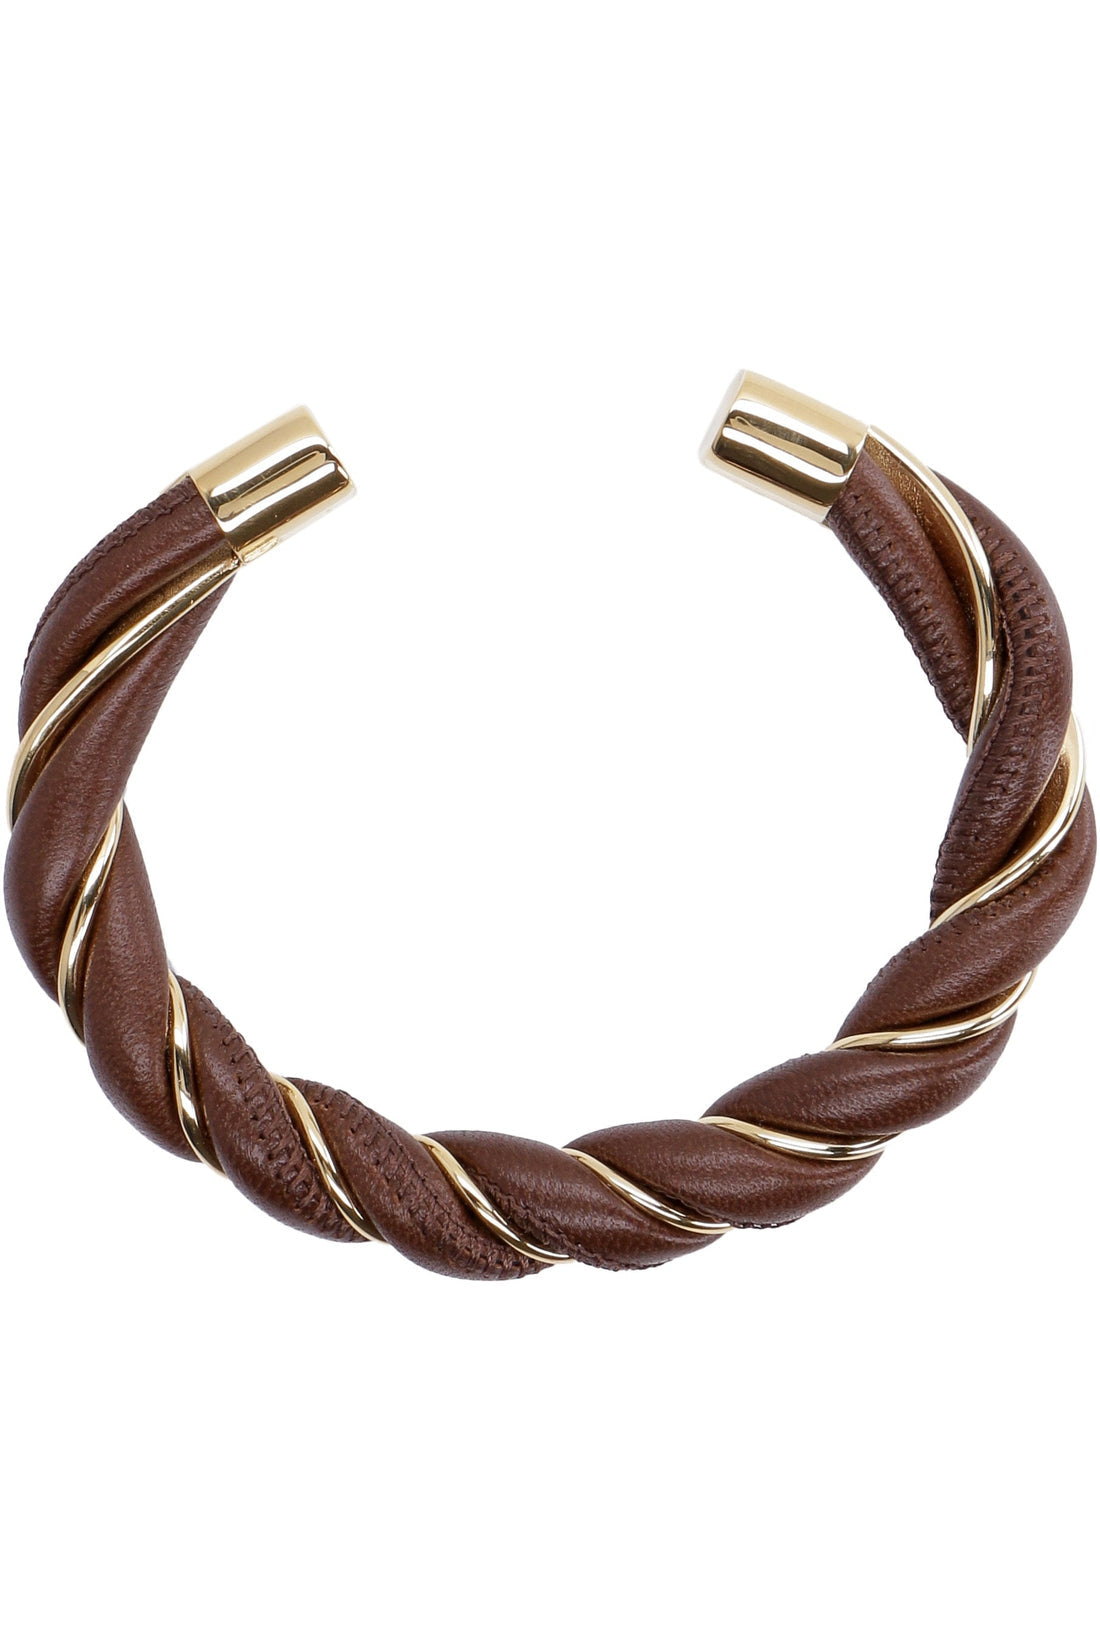 Bottega Veneta-OUTLET-SALE-Leather bracelet-ARCHIVIST